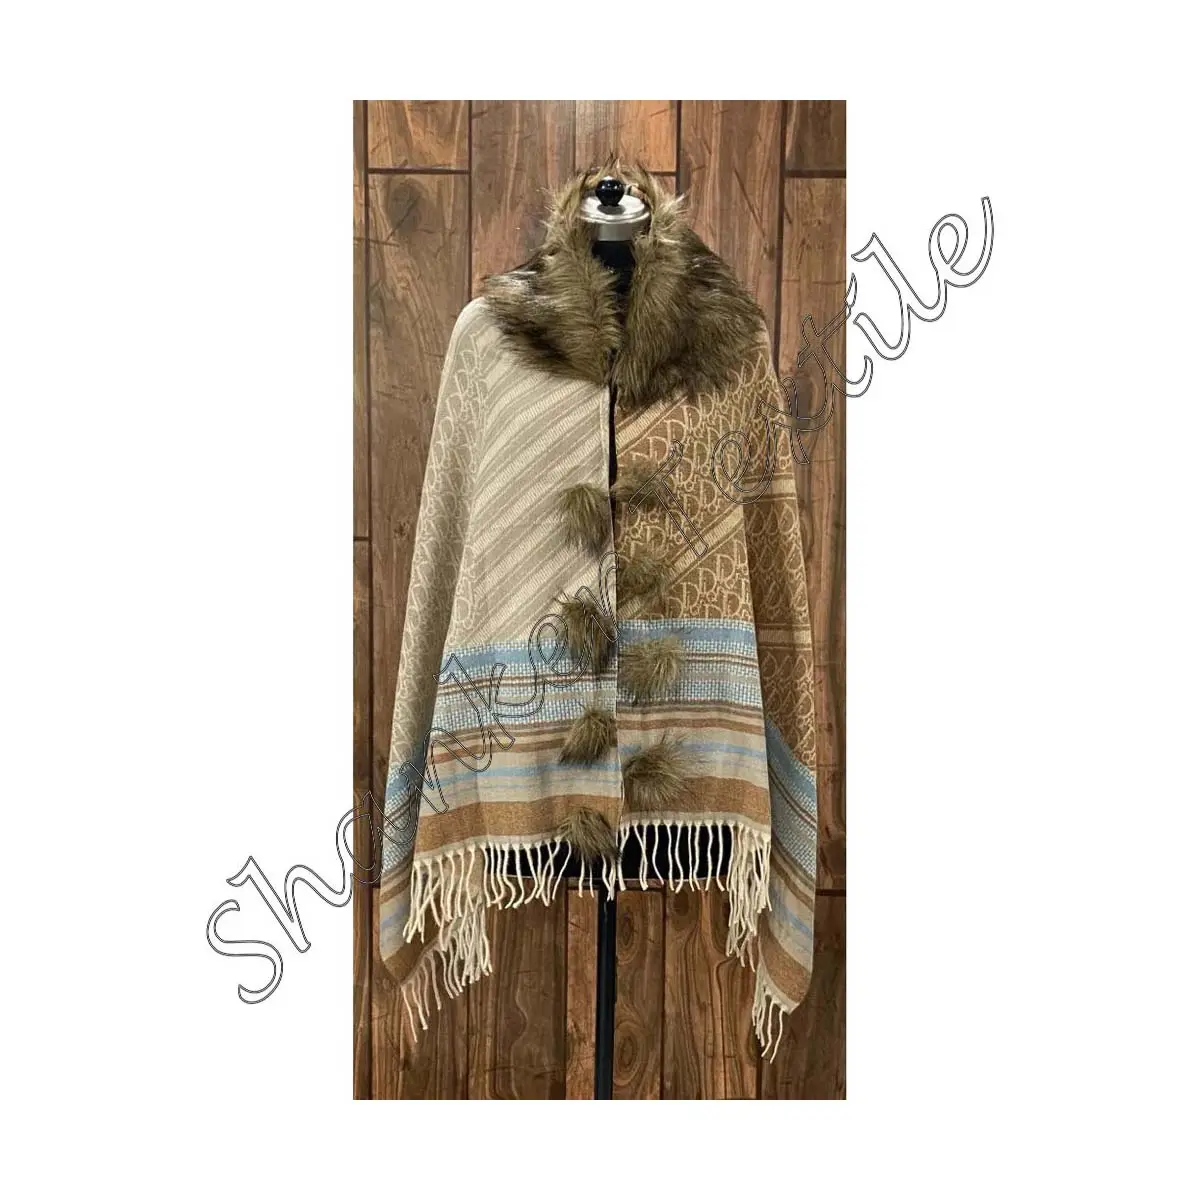 Scarf Fur New Scarf European American Lady Poncho With Fur Collar Winter Keep Warm With Shiny Yarn Knit Shawl For Women